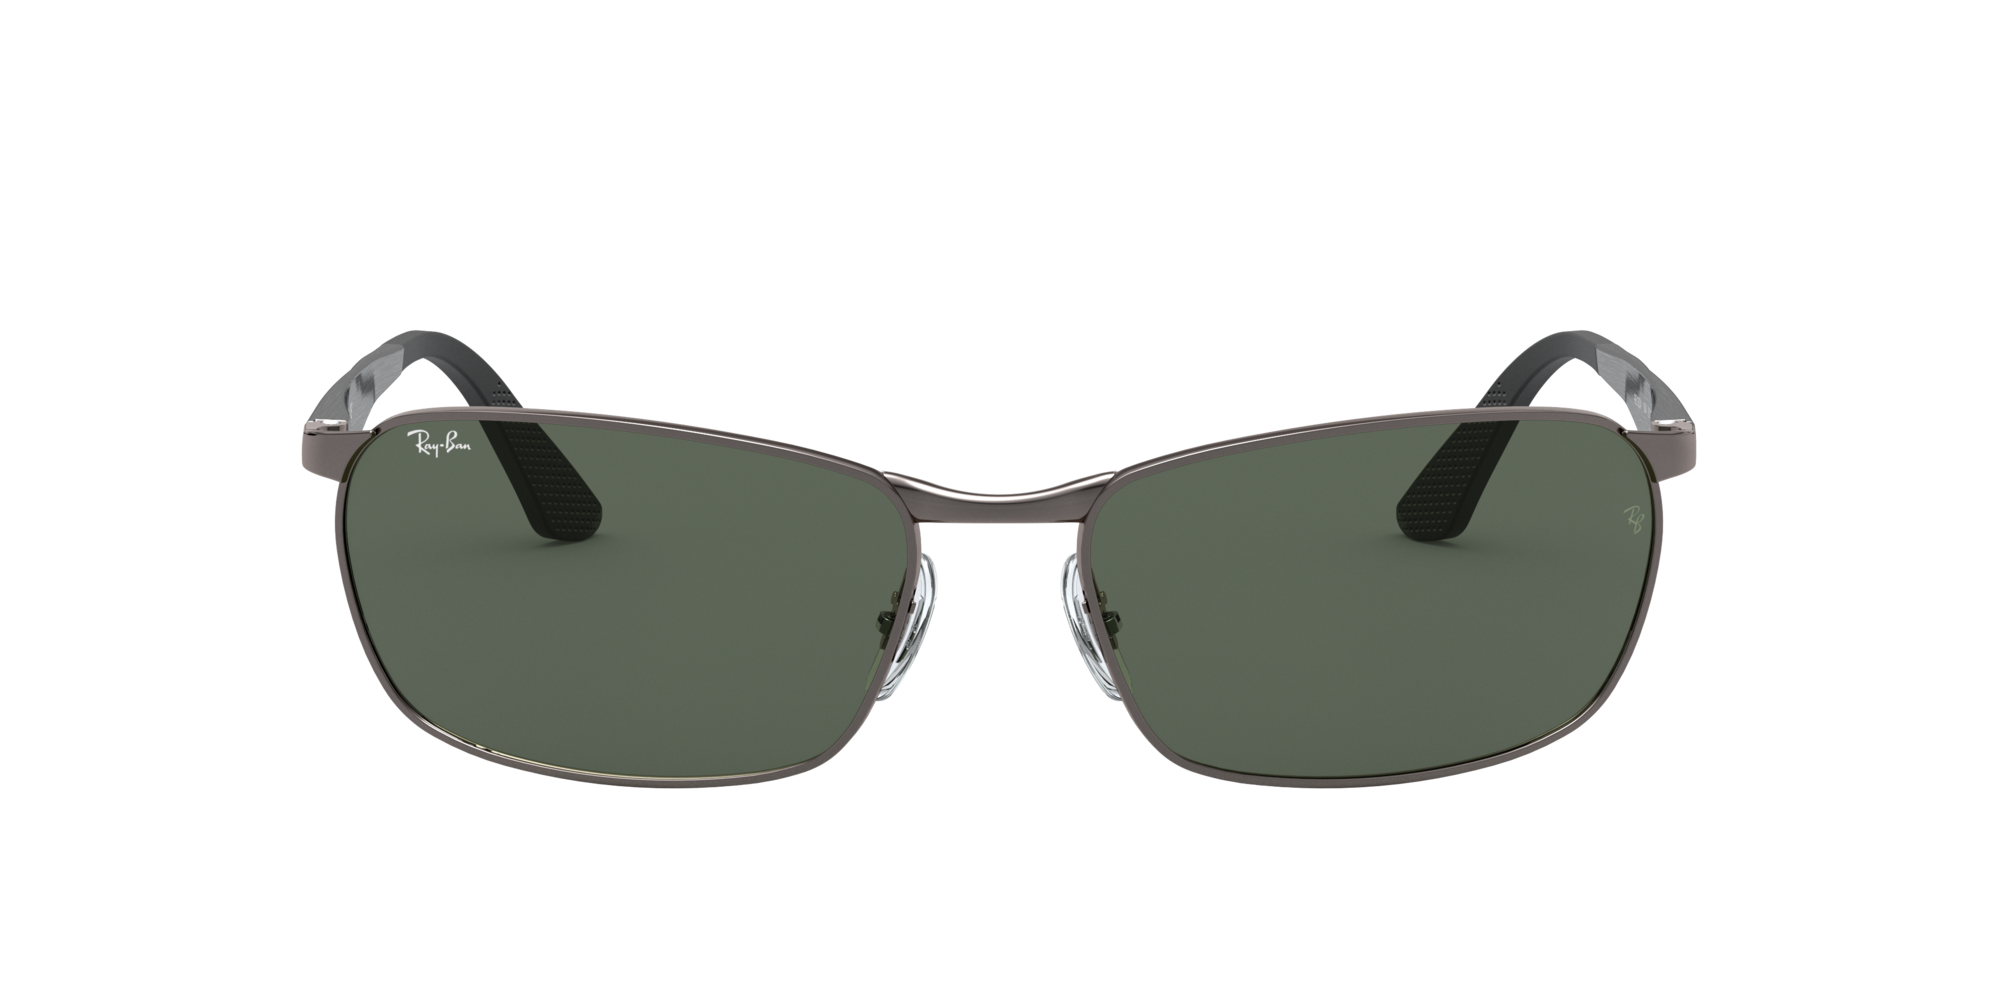 Ray-Ban 0RB3534 in Gunmetal Sunglasses 